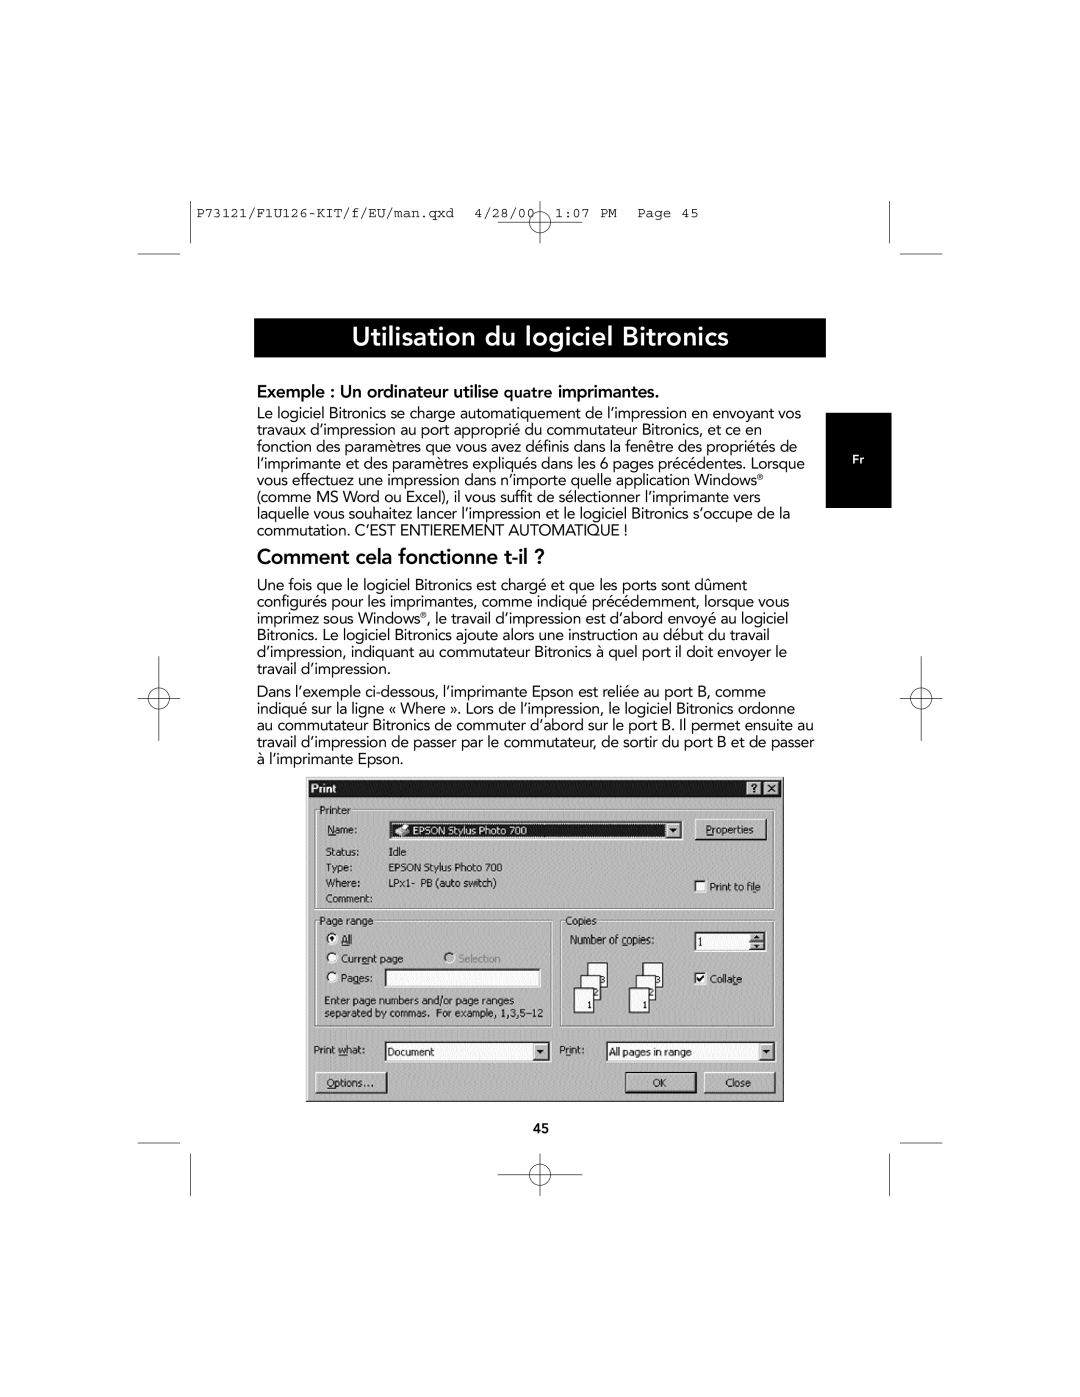 Belkin F1U126-KIT, P73121 user manual Utilisation du logiciel Bitronics, Comment cela fonctionne t-il ? 